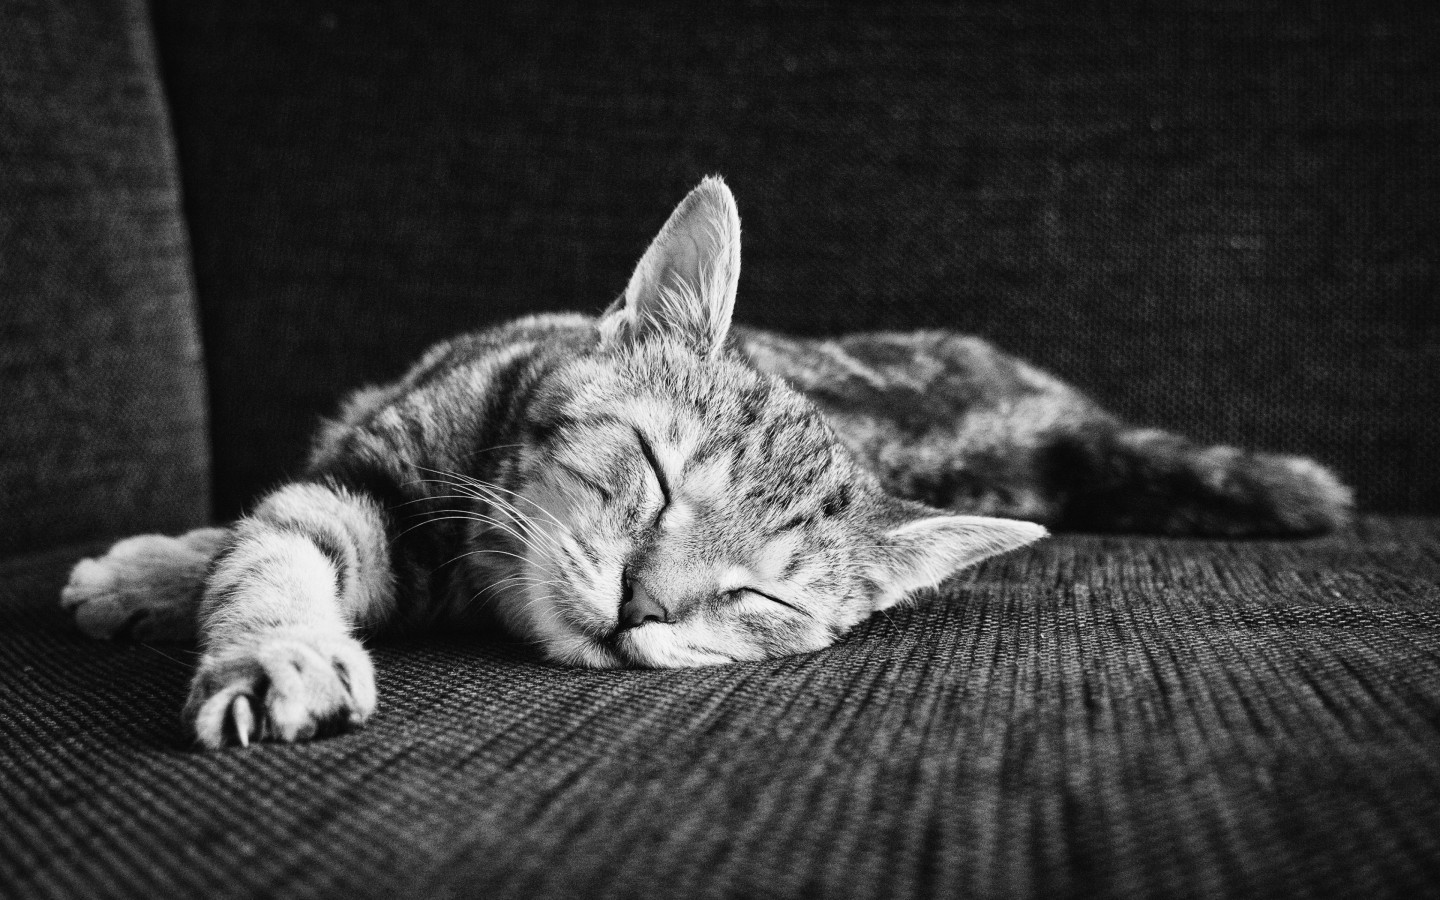 Zen of sleeping kitten wallpaper 1440x900